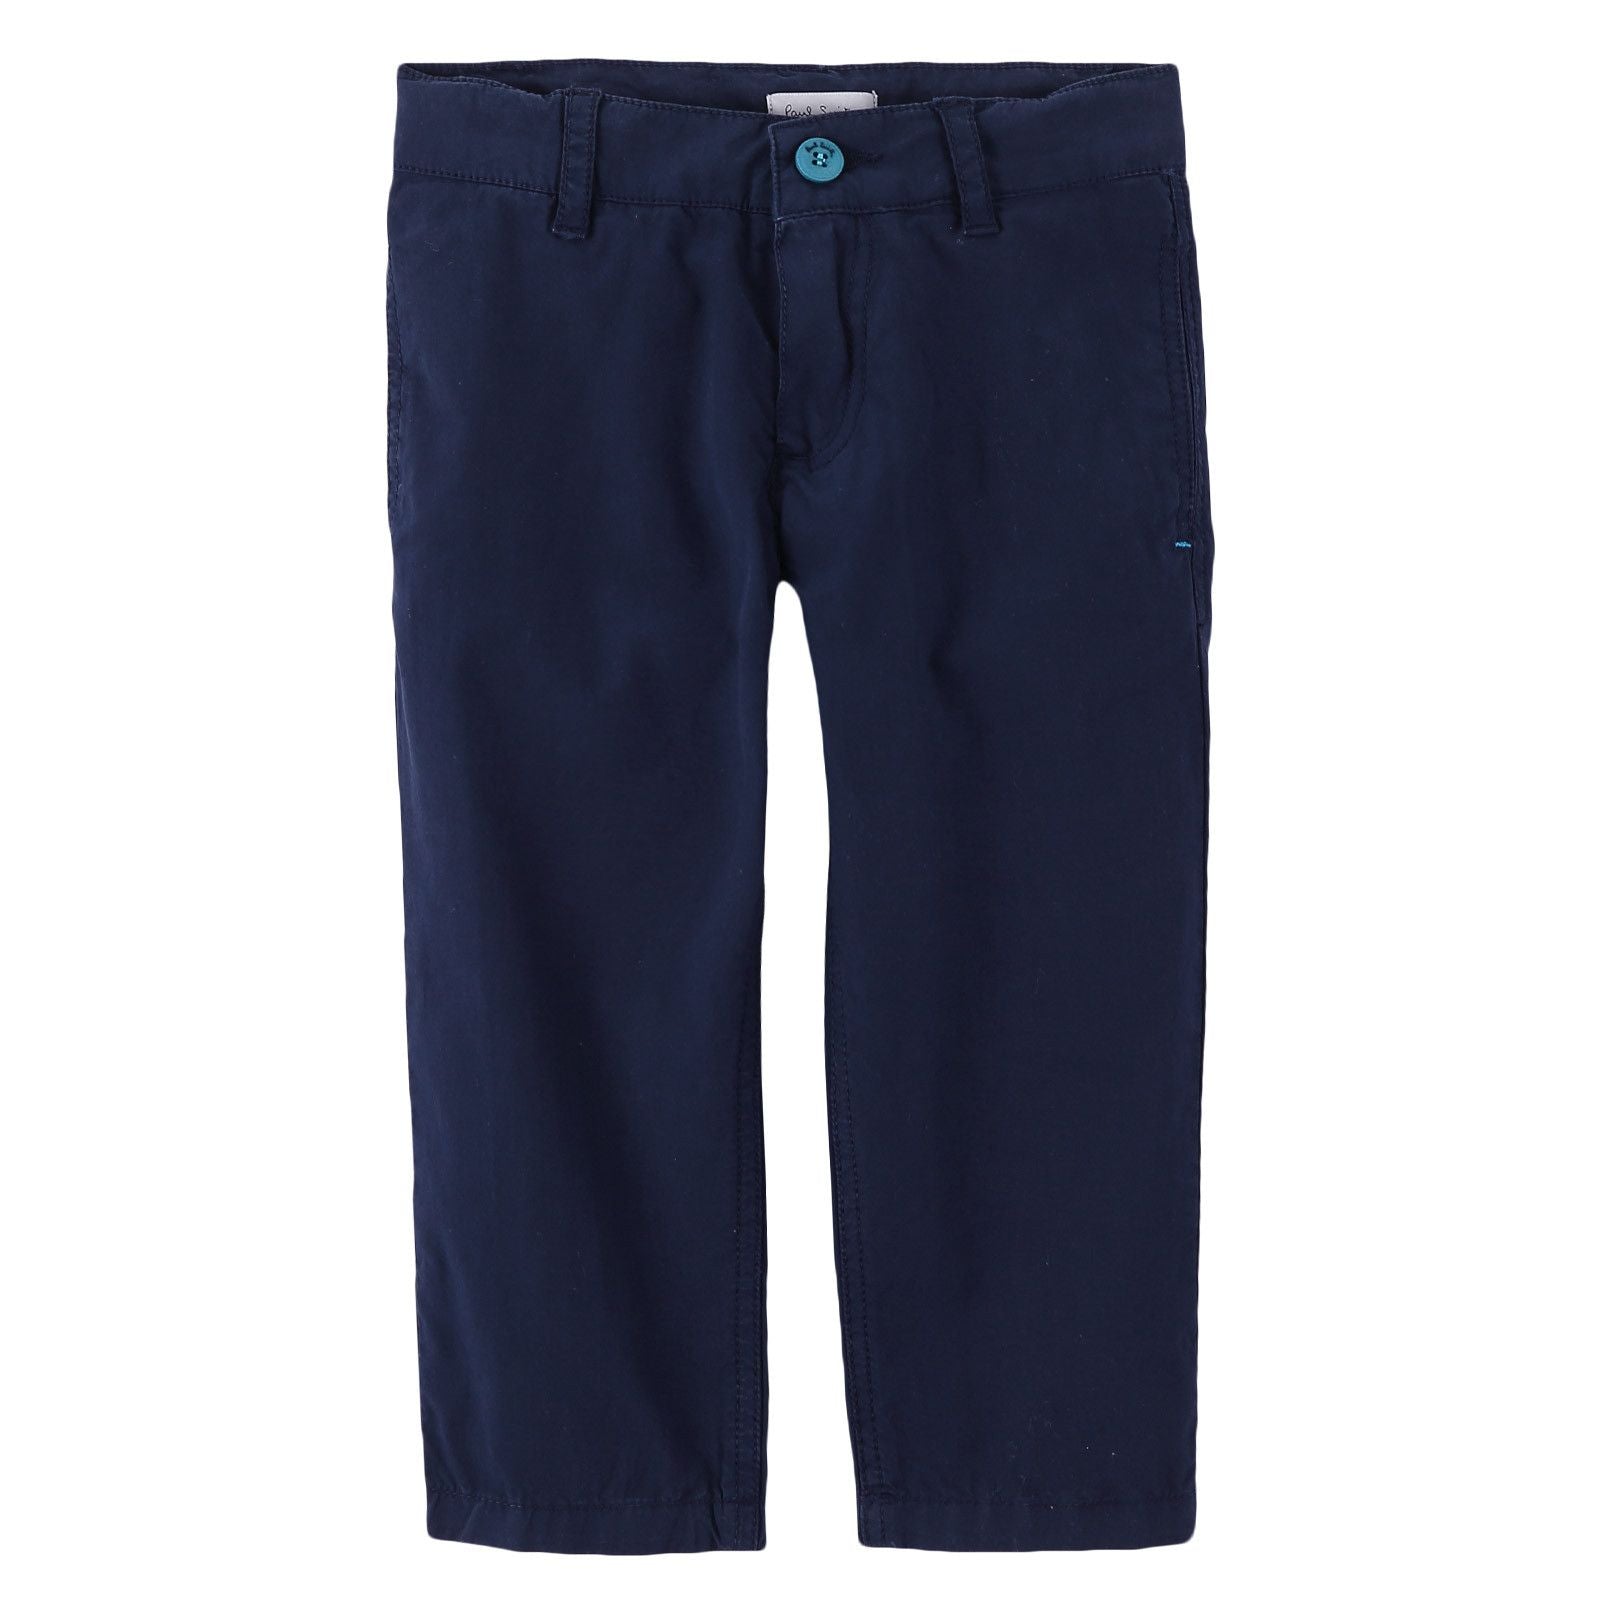 Boys Navy Blue Cotton Straight Cut Style Trousers - CÉMAROSE | Children's Fashion Store - 1